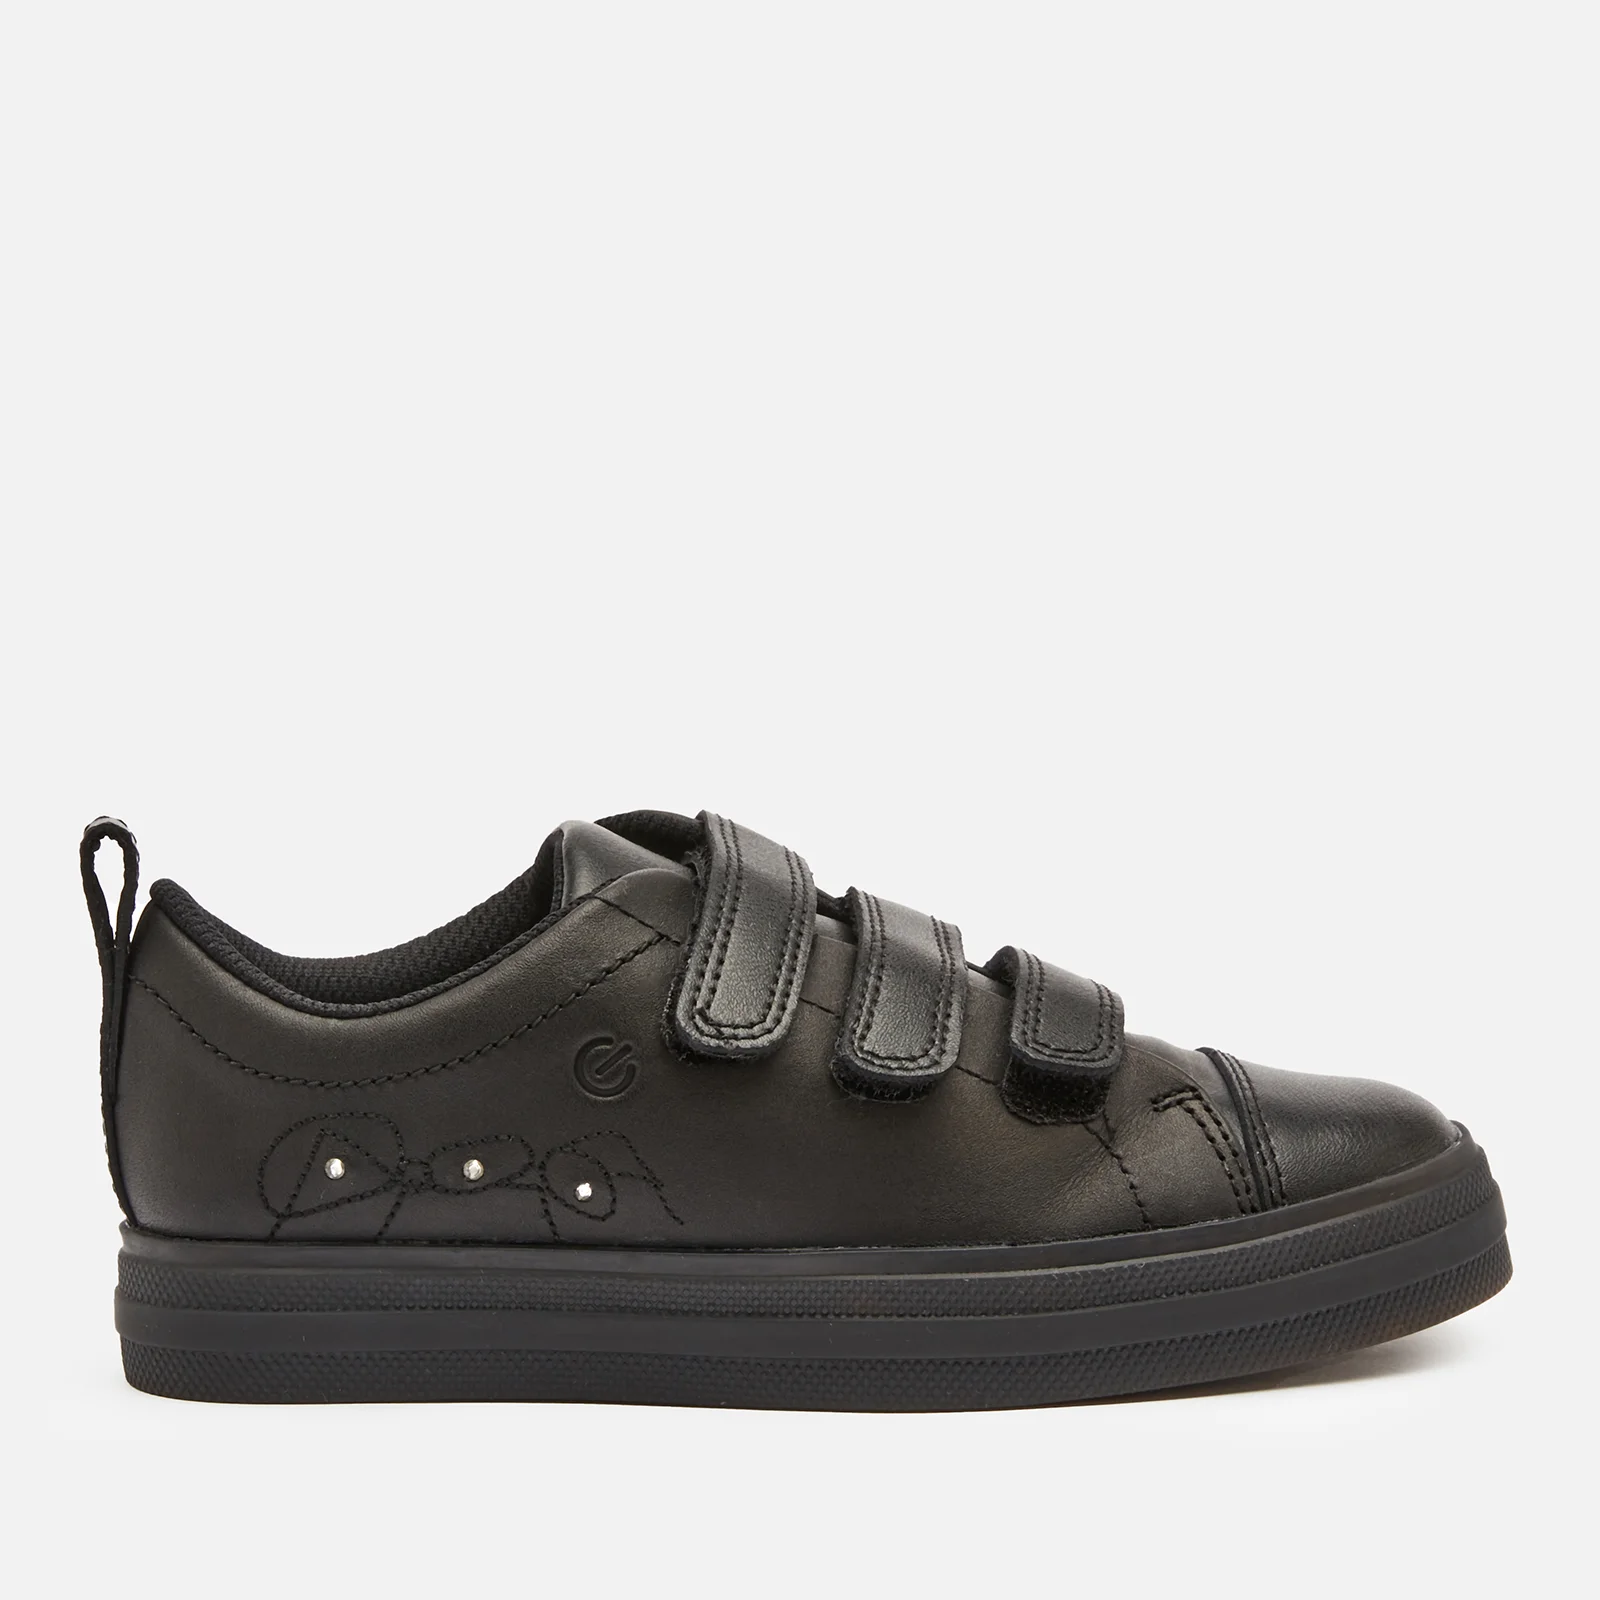 Clarks Flare Bright Kids' School Shoes - Black Leather | Allsole